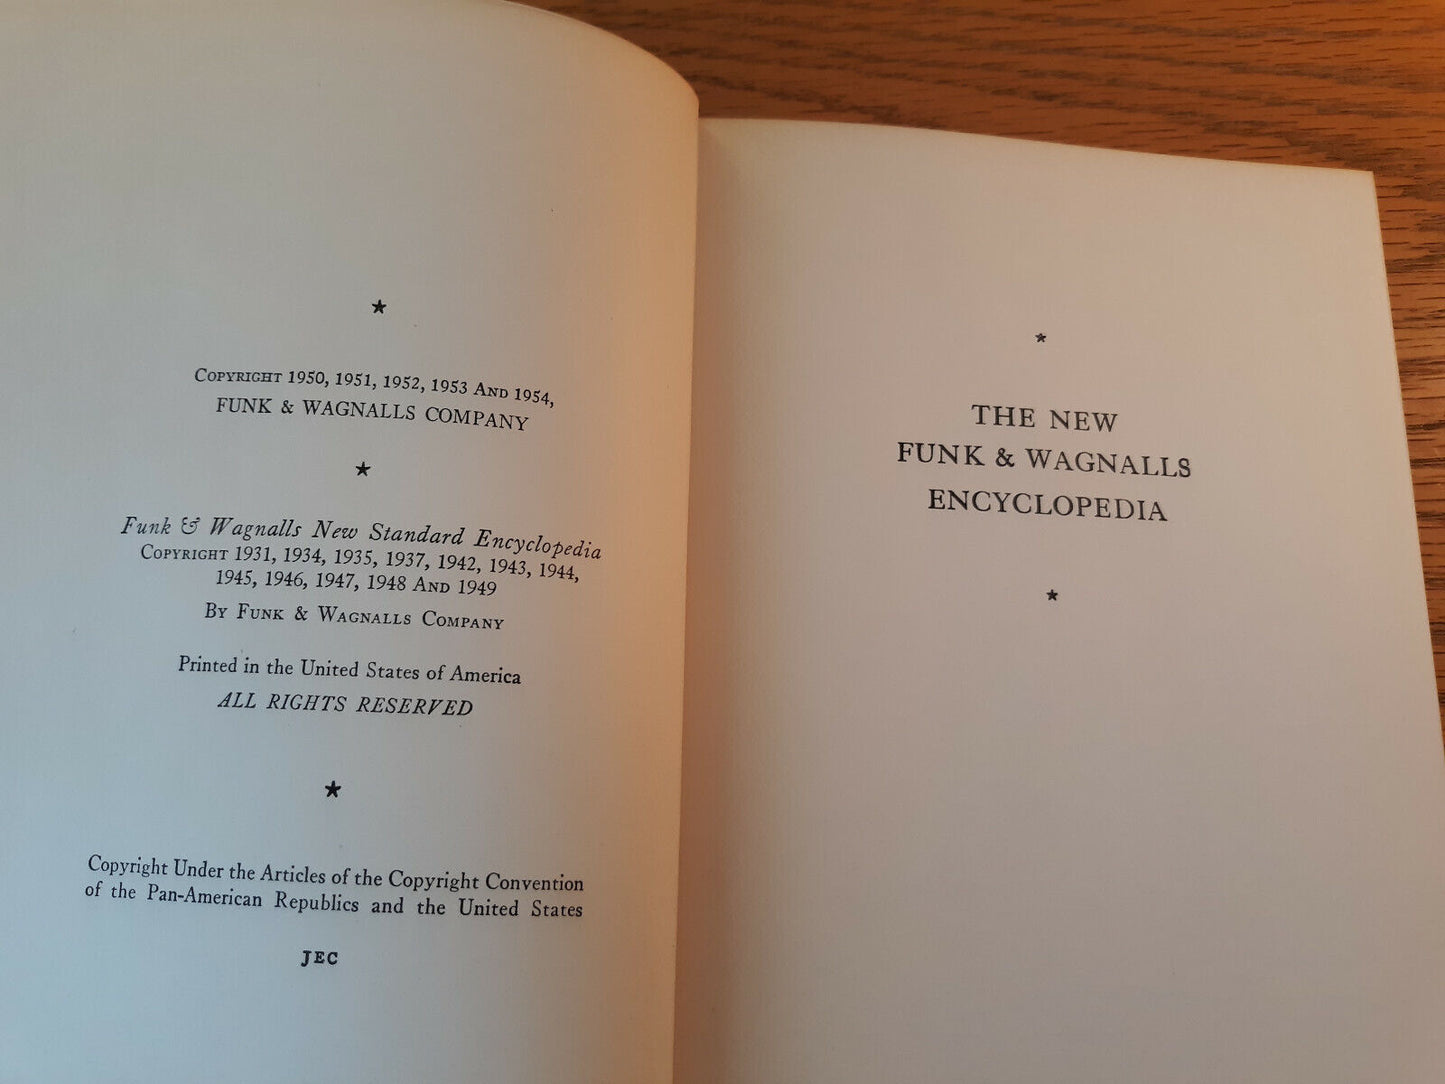 The New Funk & Wagnalls Encyclopedia 1954 Unicorn Pub Hardcover Volume 33